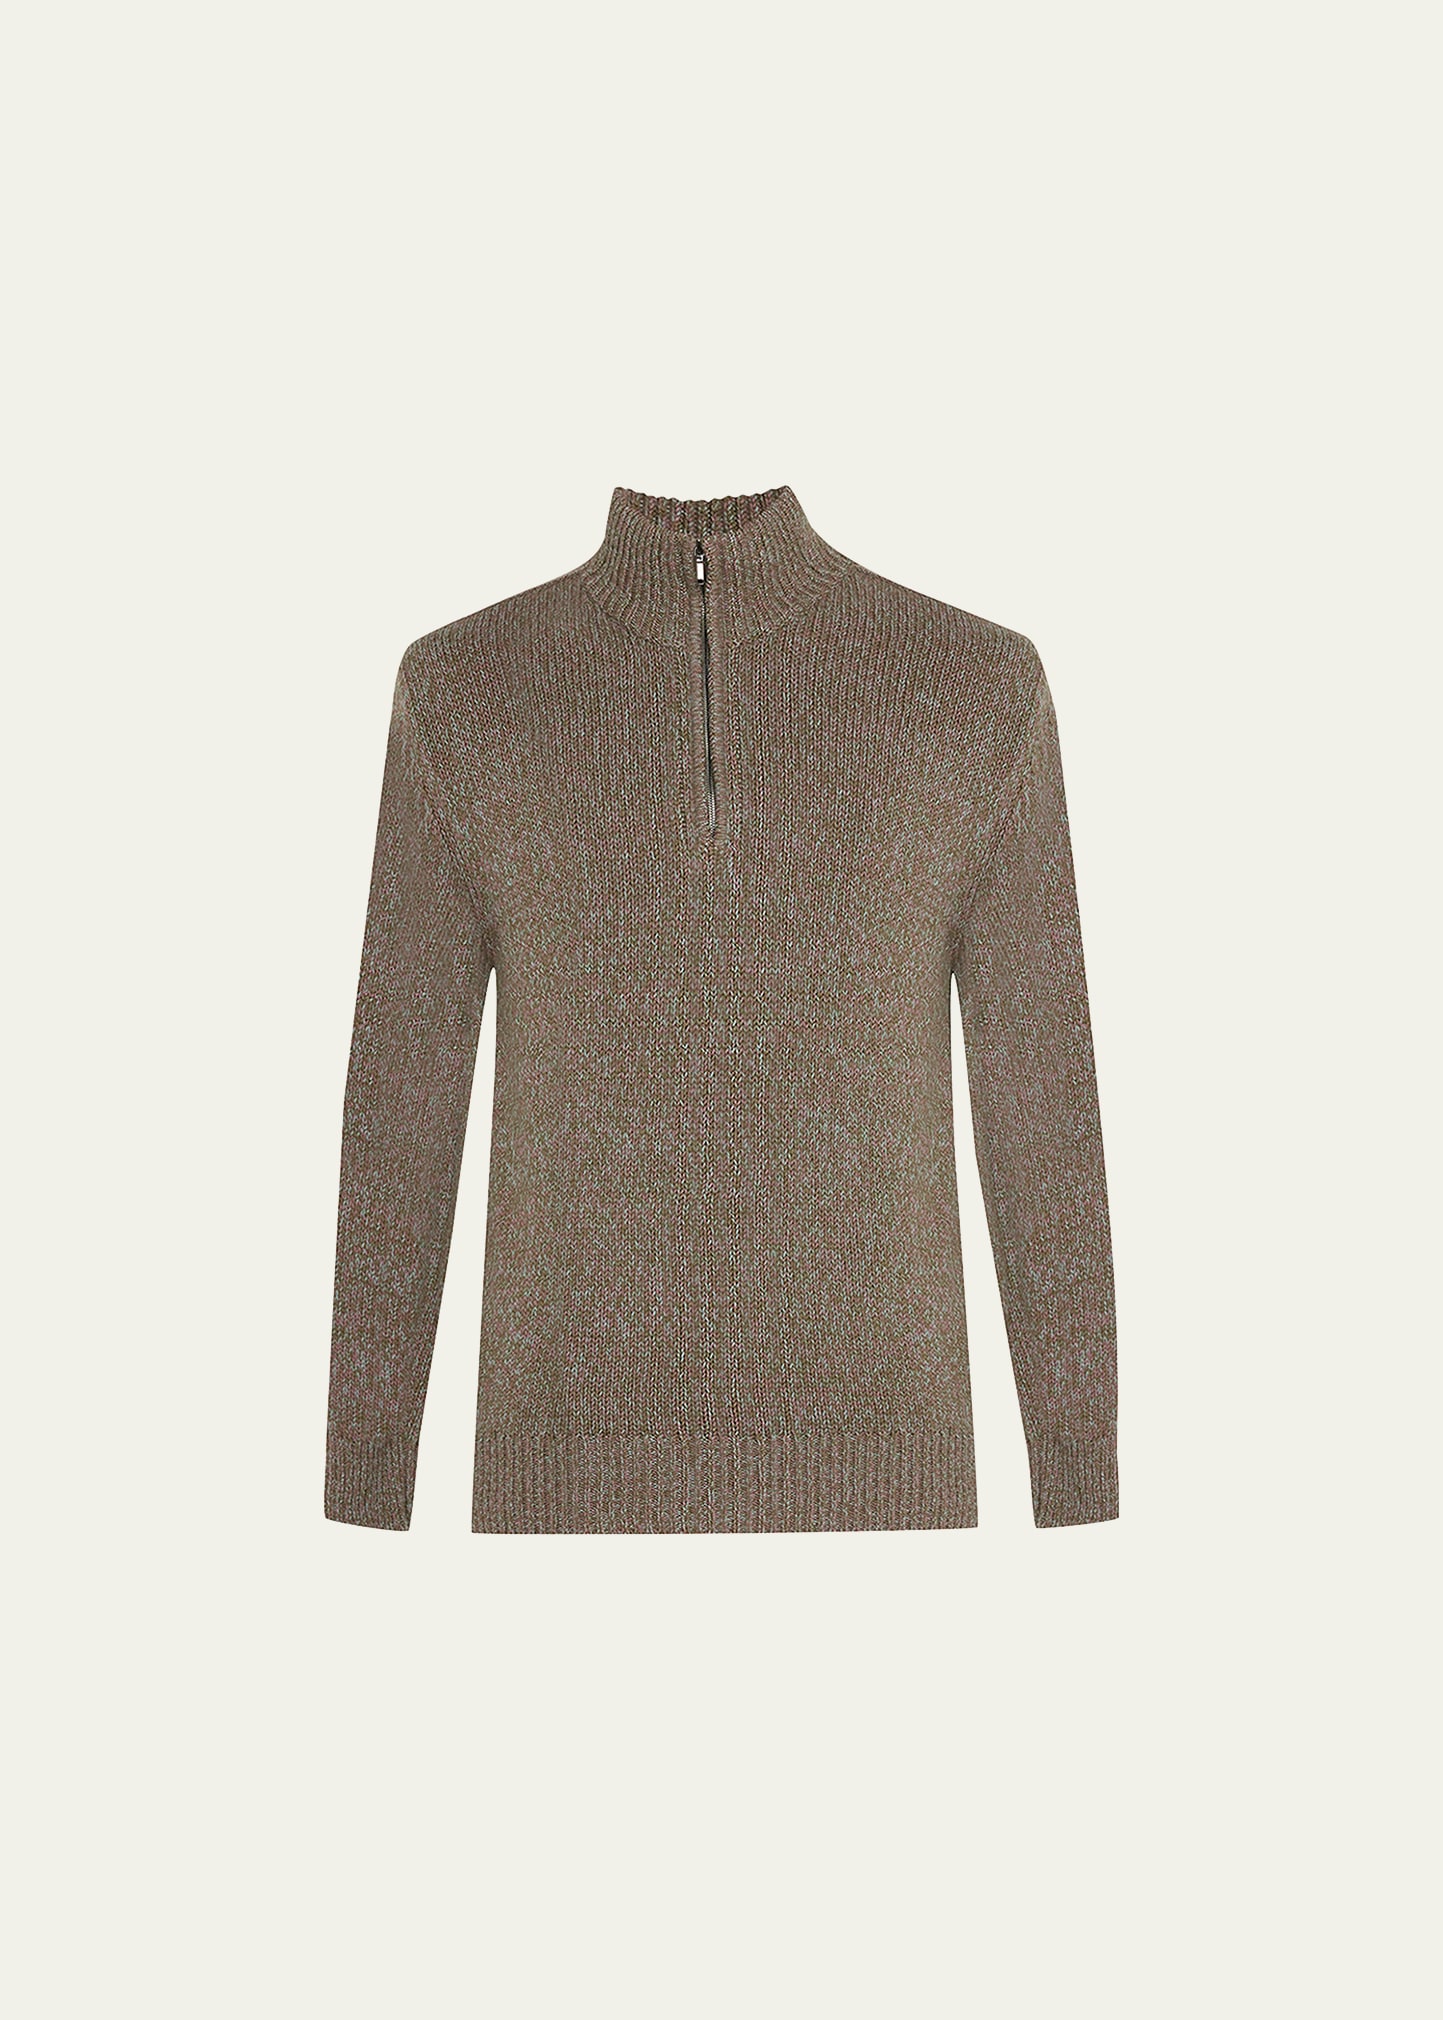 Men's Mezzocollo Quarter-Zip Cashmere Sweater